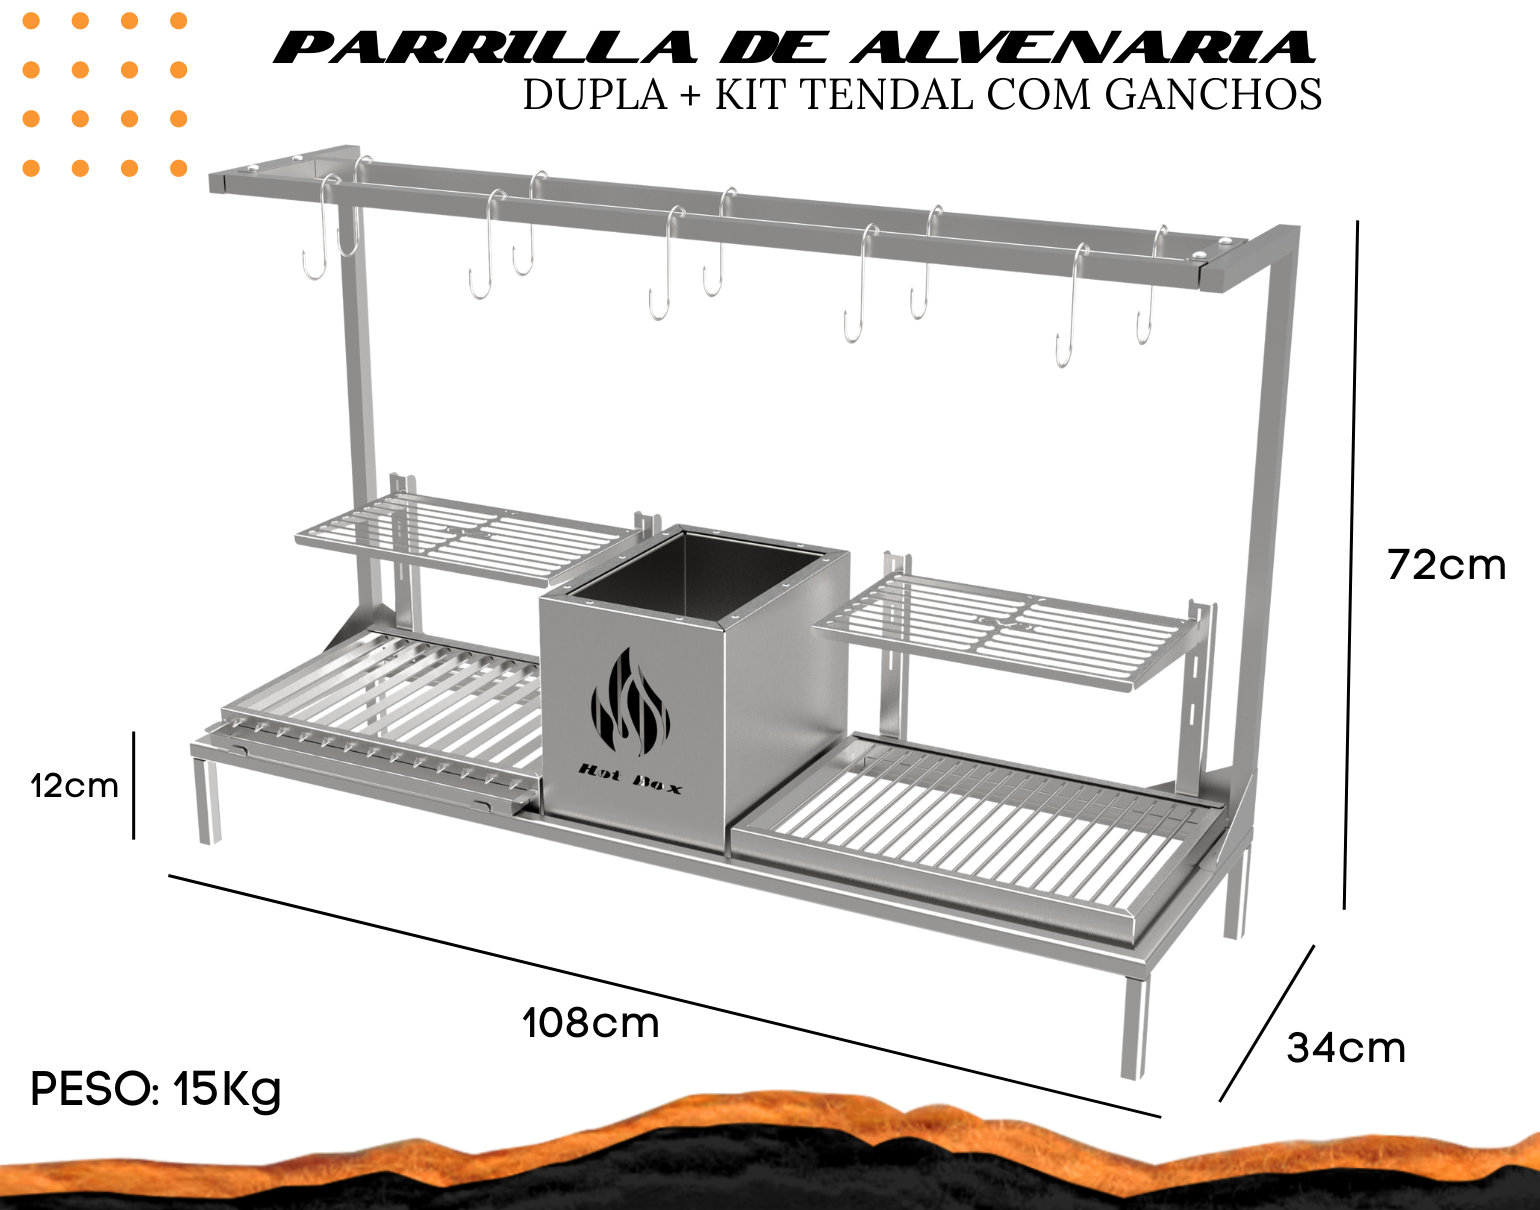 Churrasqueira Hotbox Parrilla Para Alvenaria - 1 Firebox + 2 Grelhas Argentina / Uruguaia + KIT TEND - 2